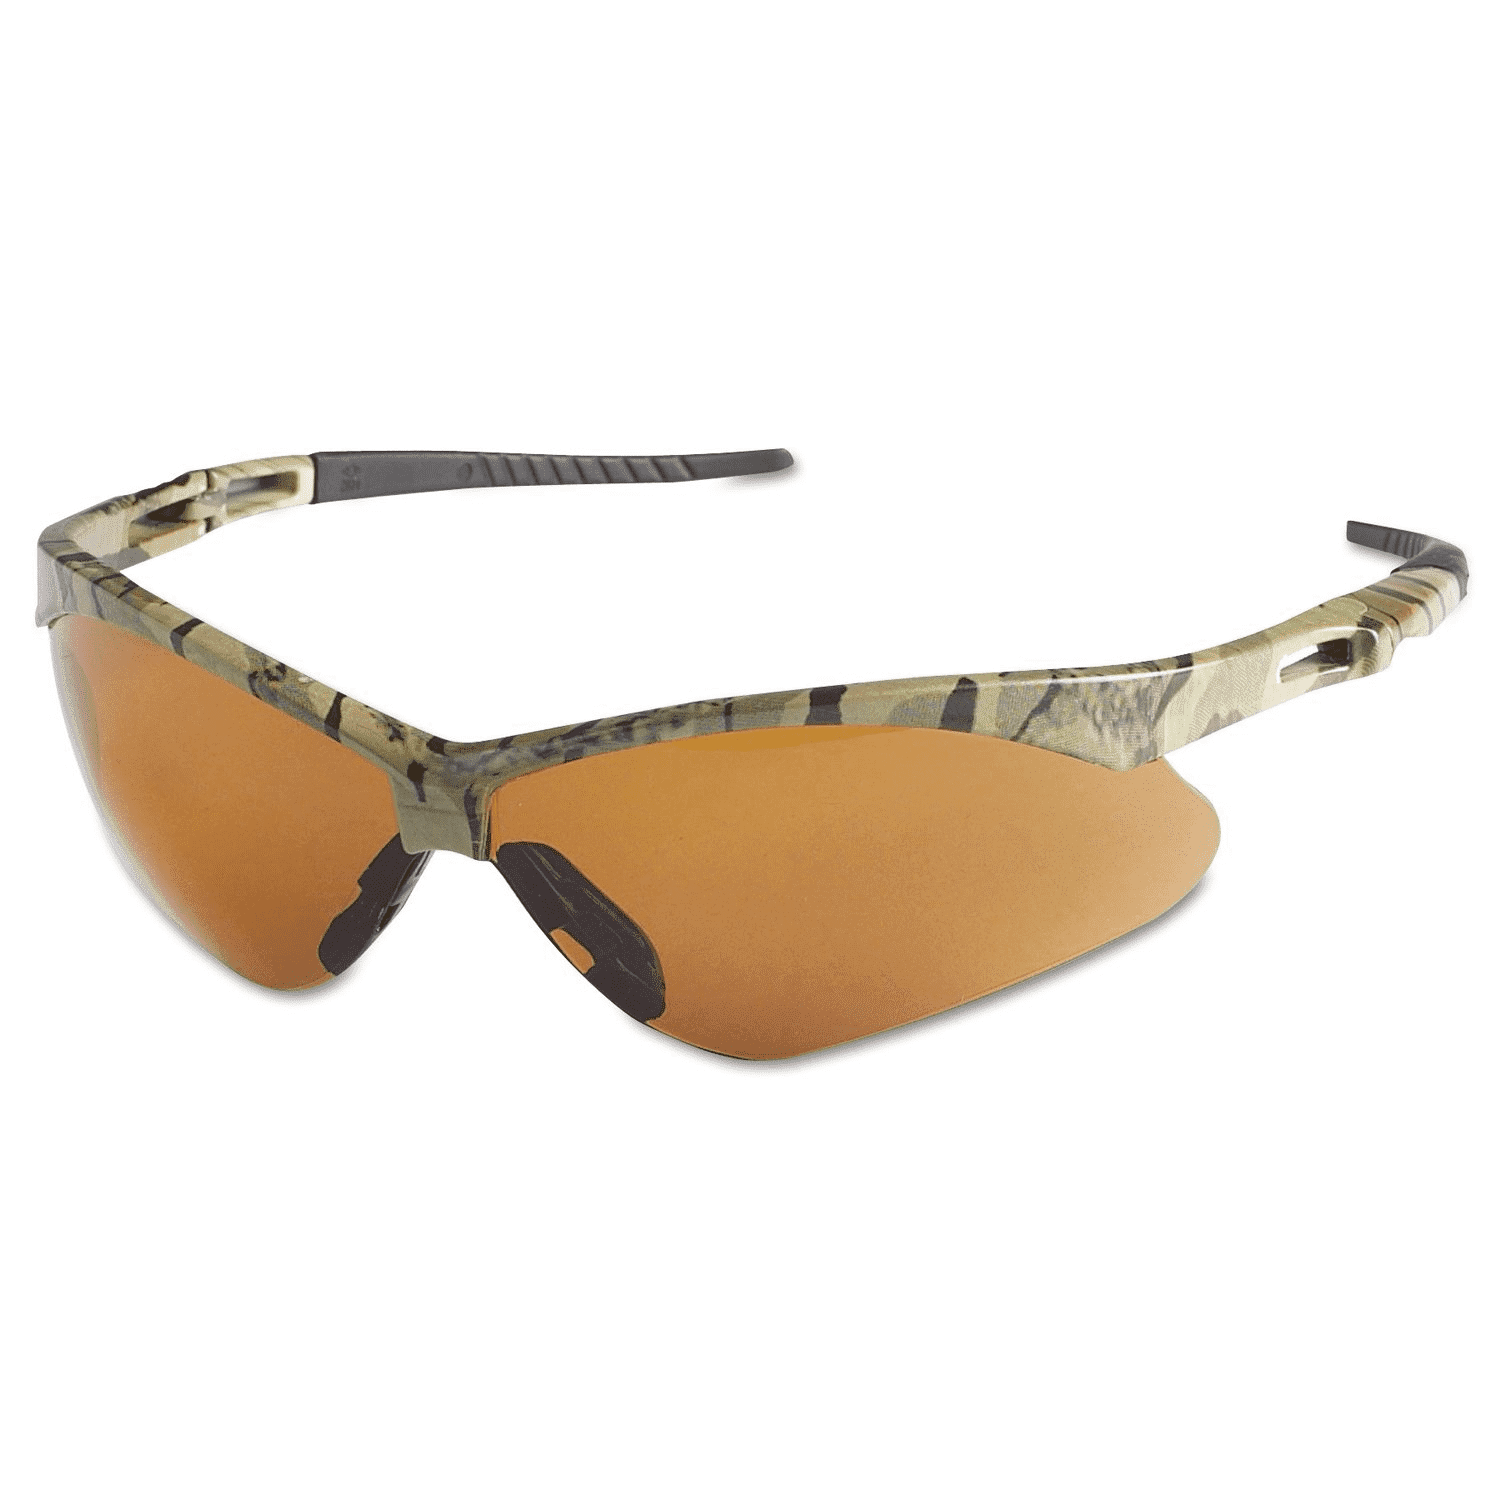 Kleenguard – Nemesis – Glasses – #19644